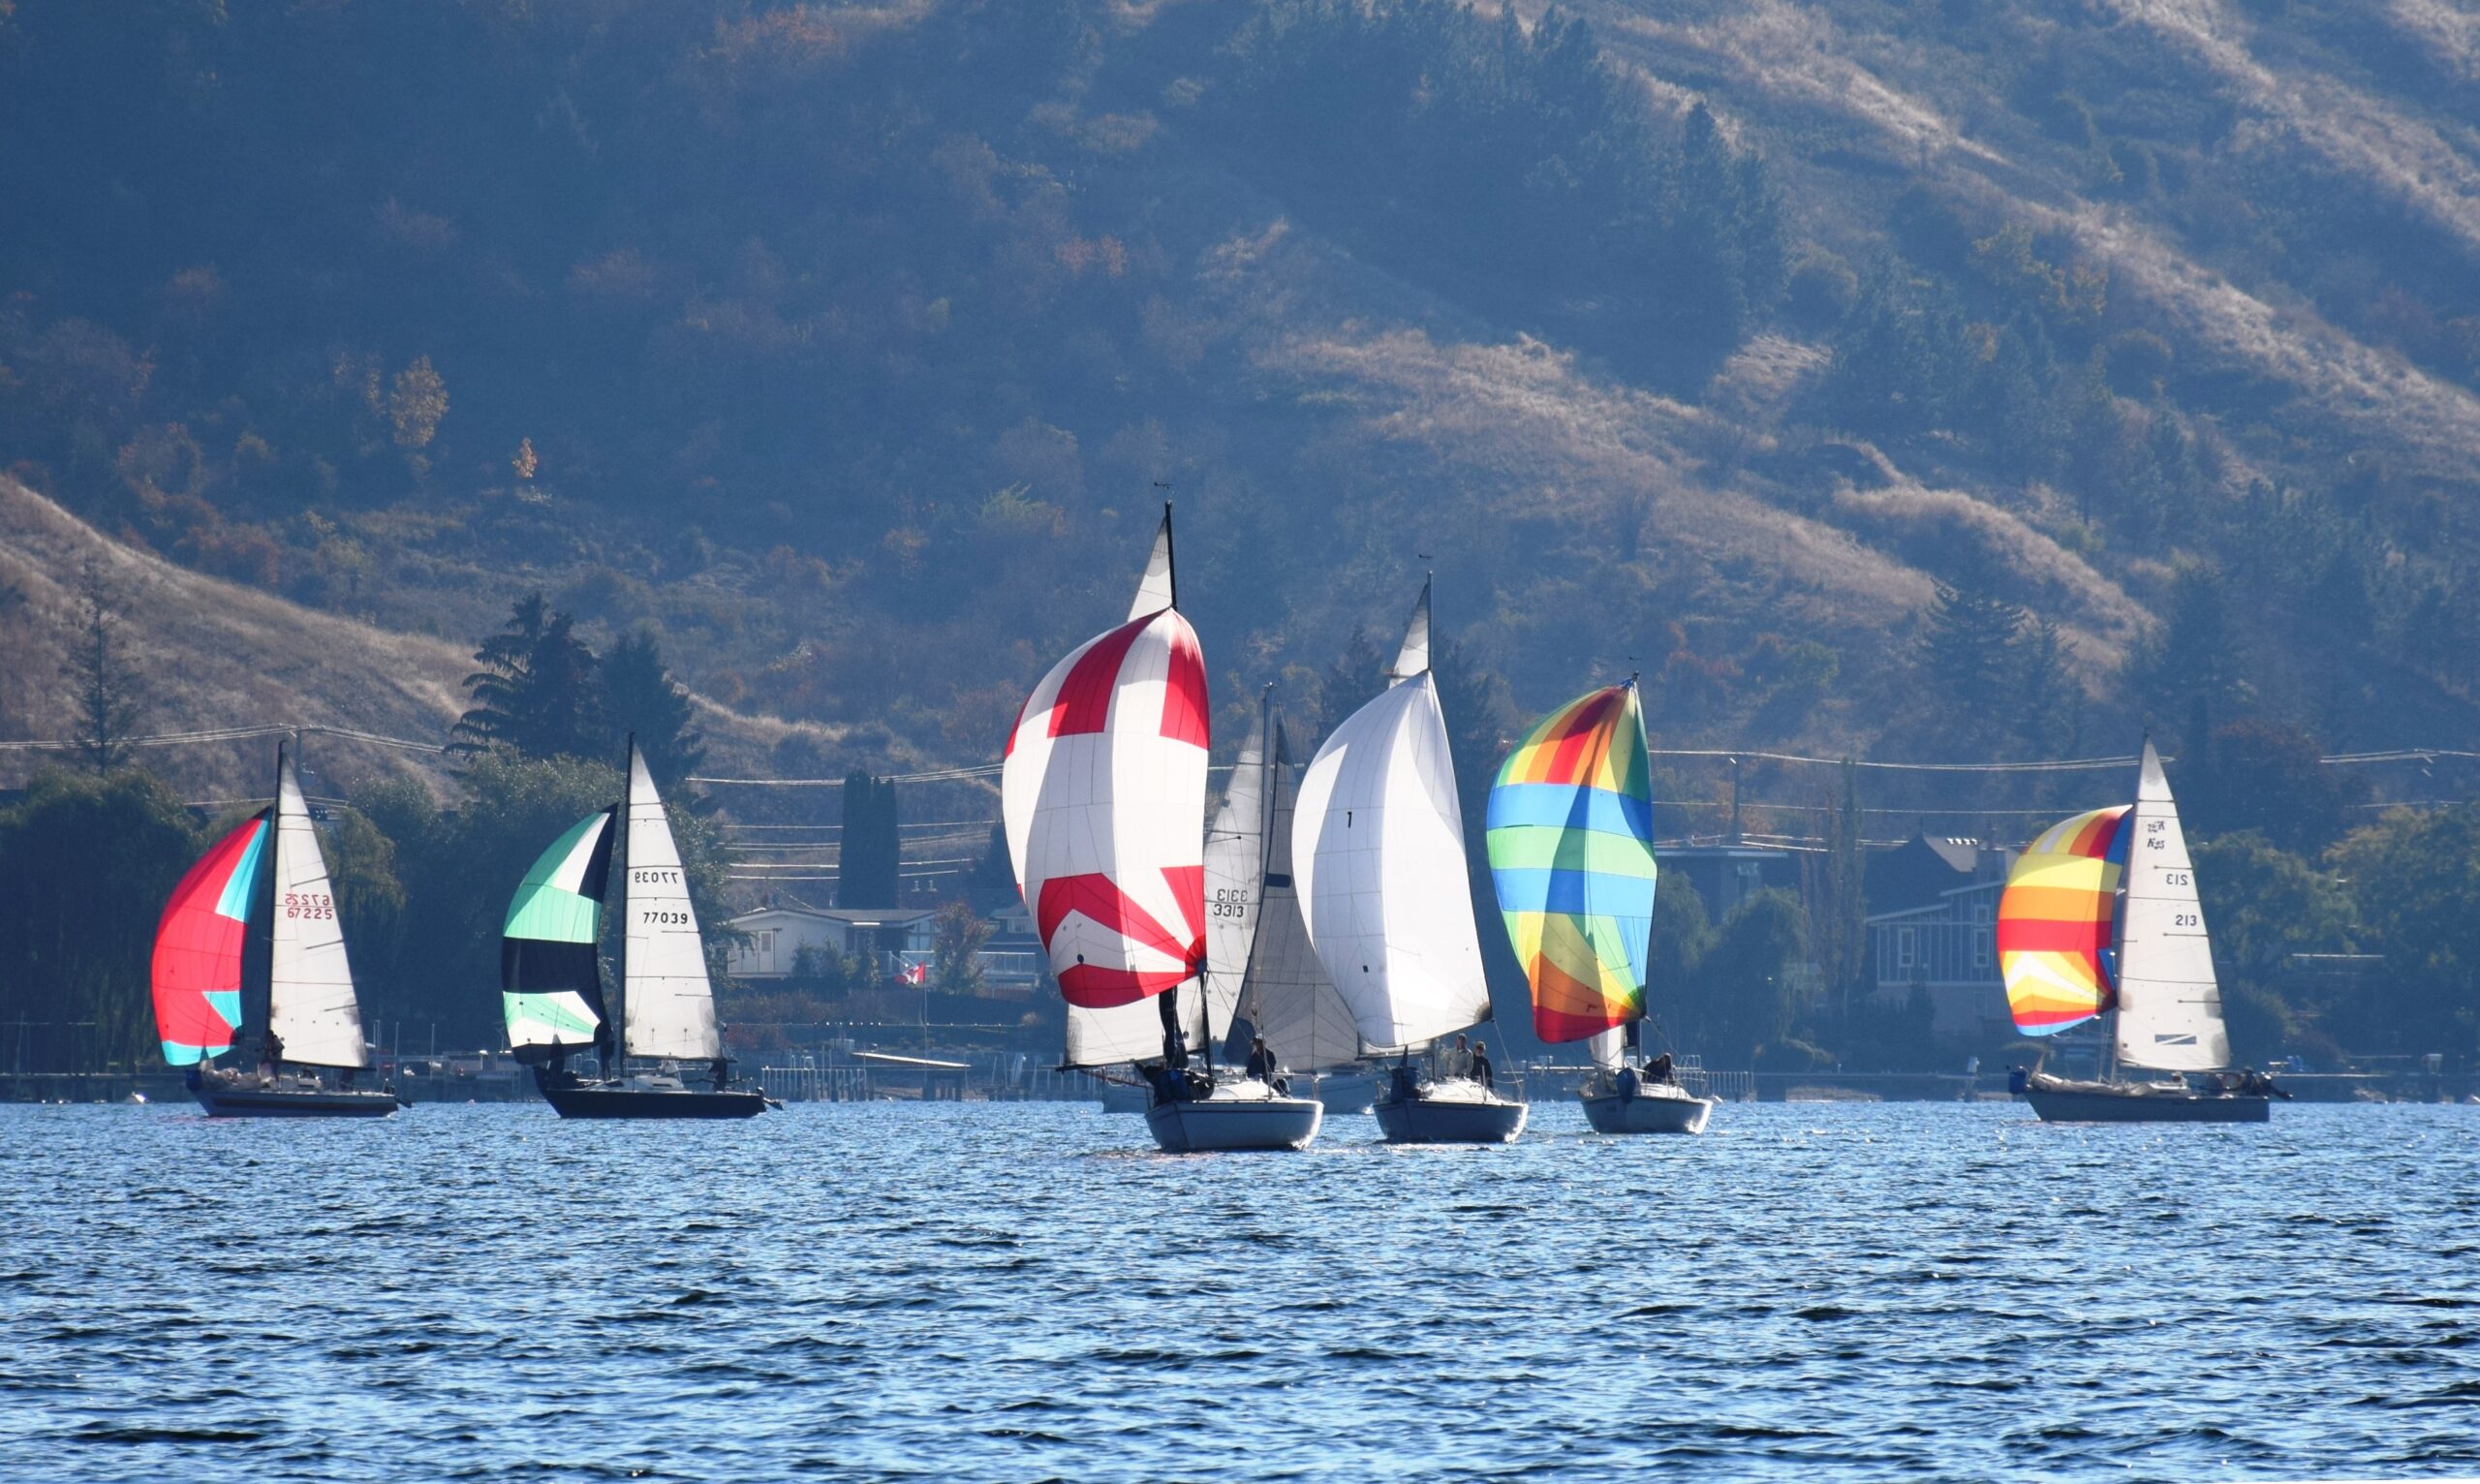 Weekly Coed Sailboat Racing on Okanagan Lake with colourful spinnakers